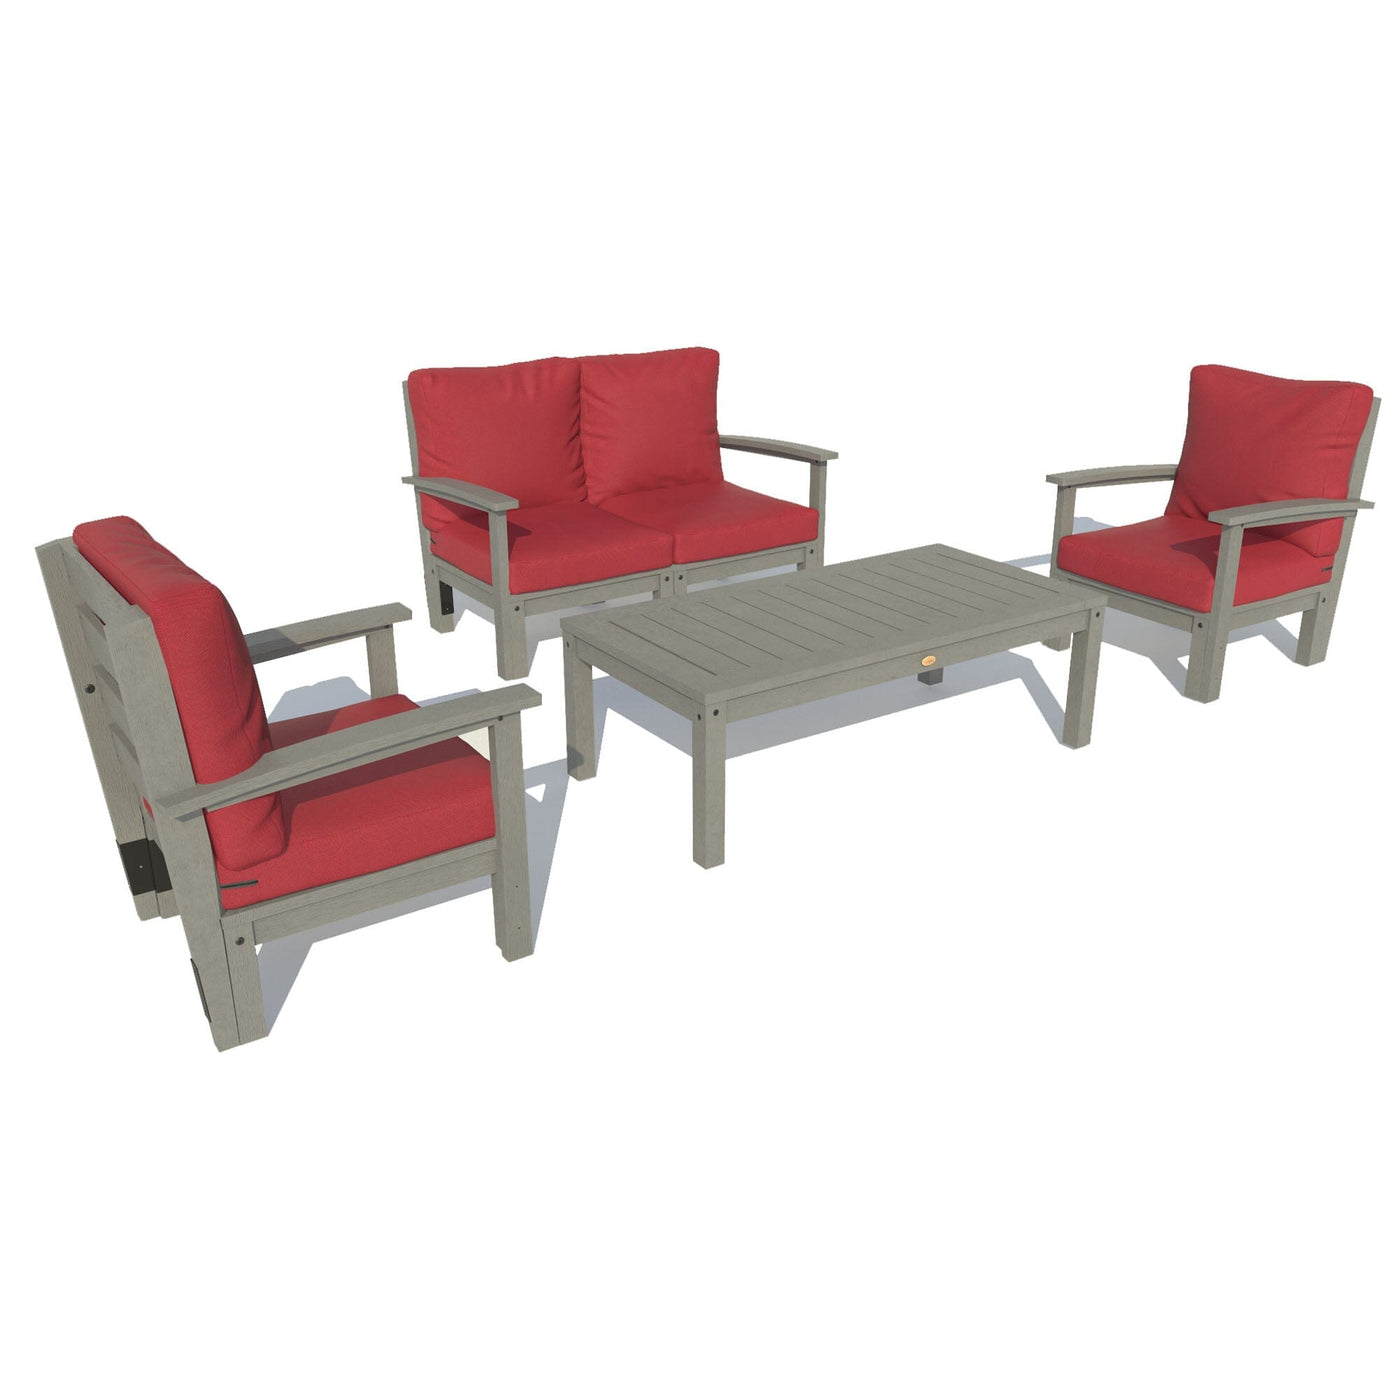 Bespoke Deep Seating: Loveseat, 2 Chair Set, and Conversation Table Deep Seating Highwood USA Firecracker Red Coastal Teak 